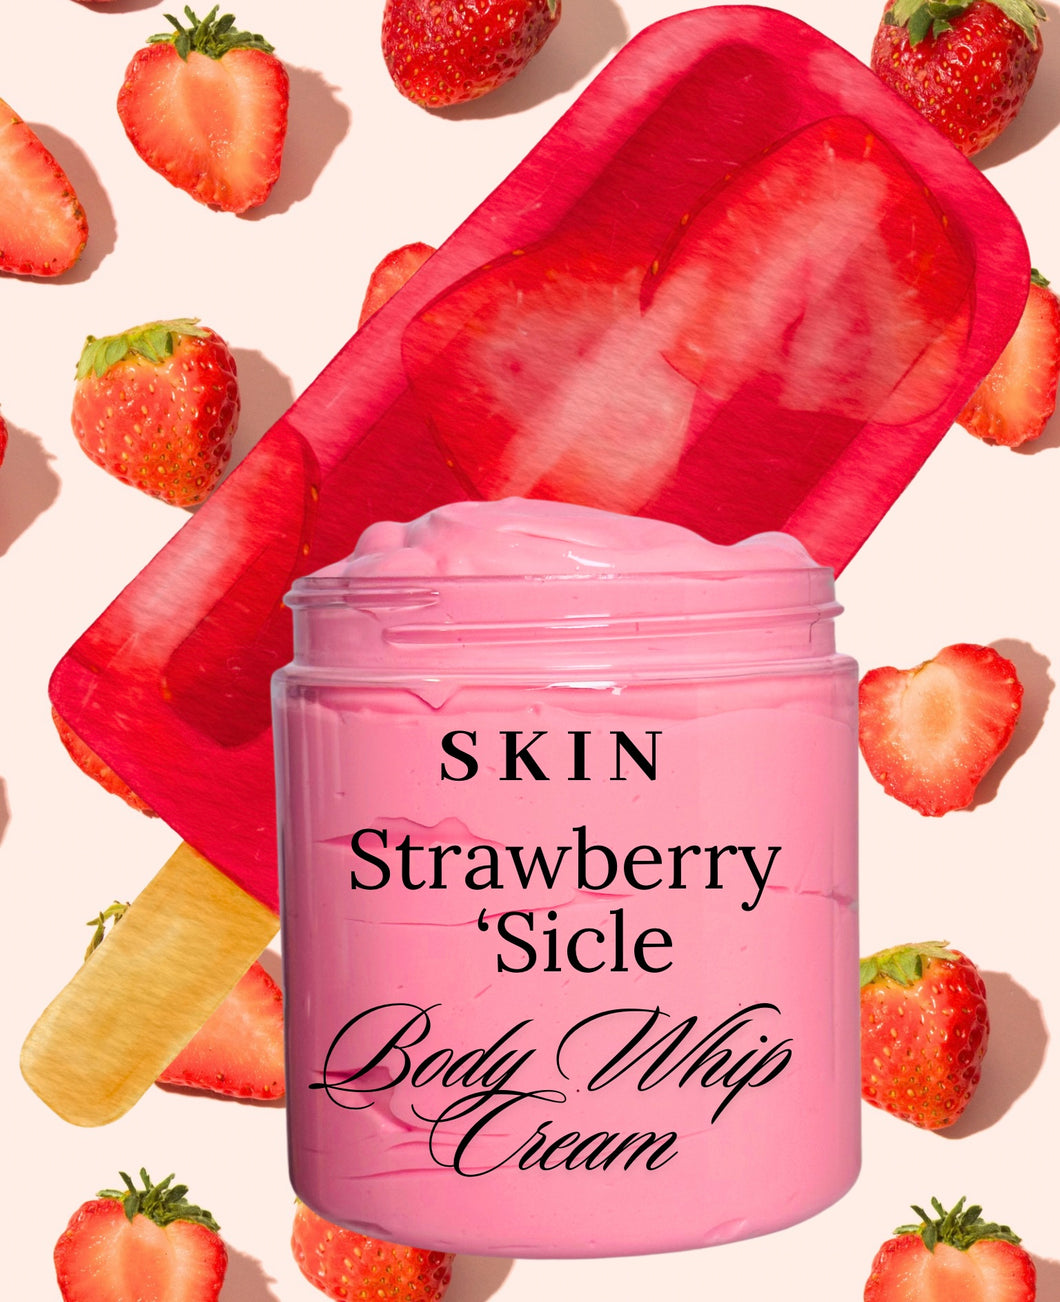 Strawberry ‘Sicle Body Whip Cream